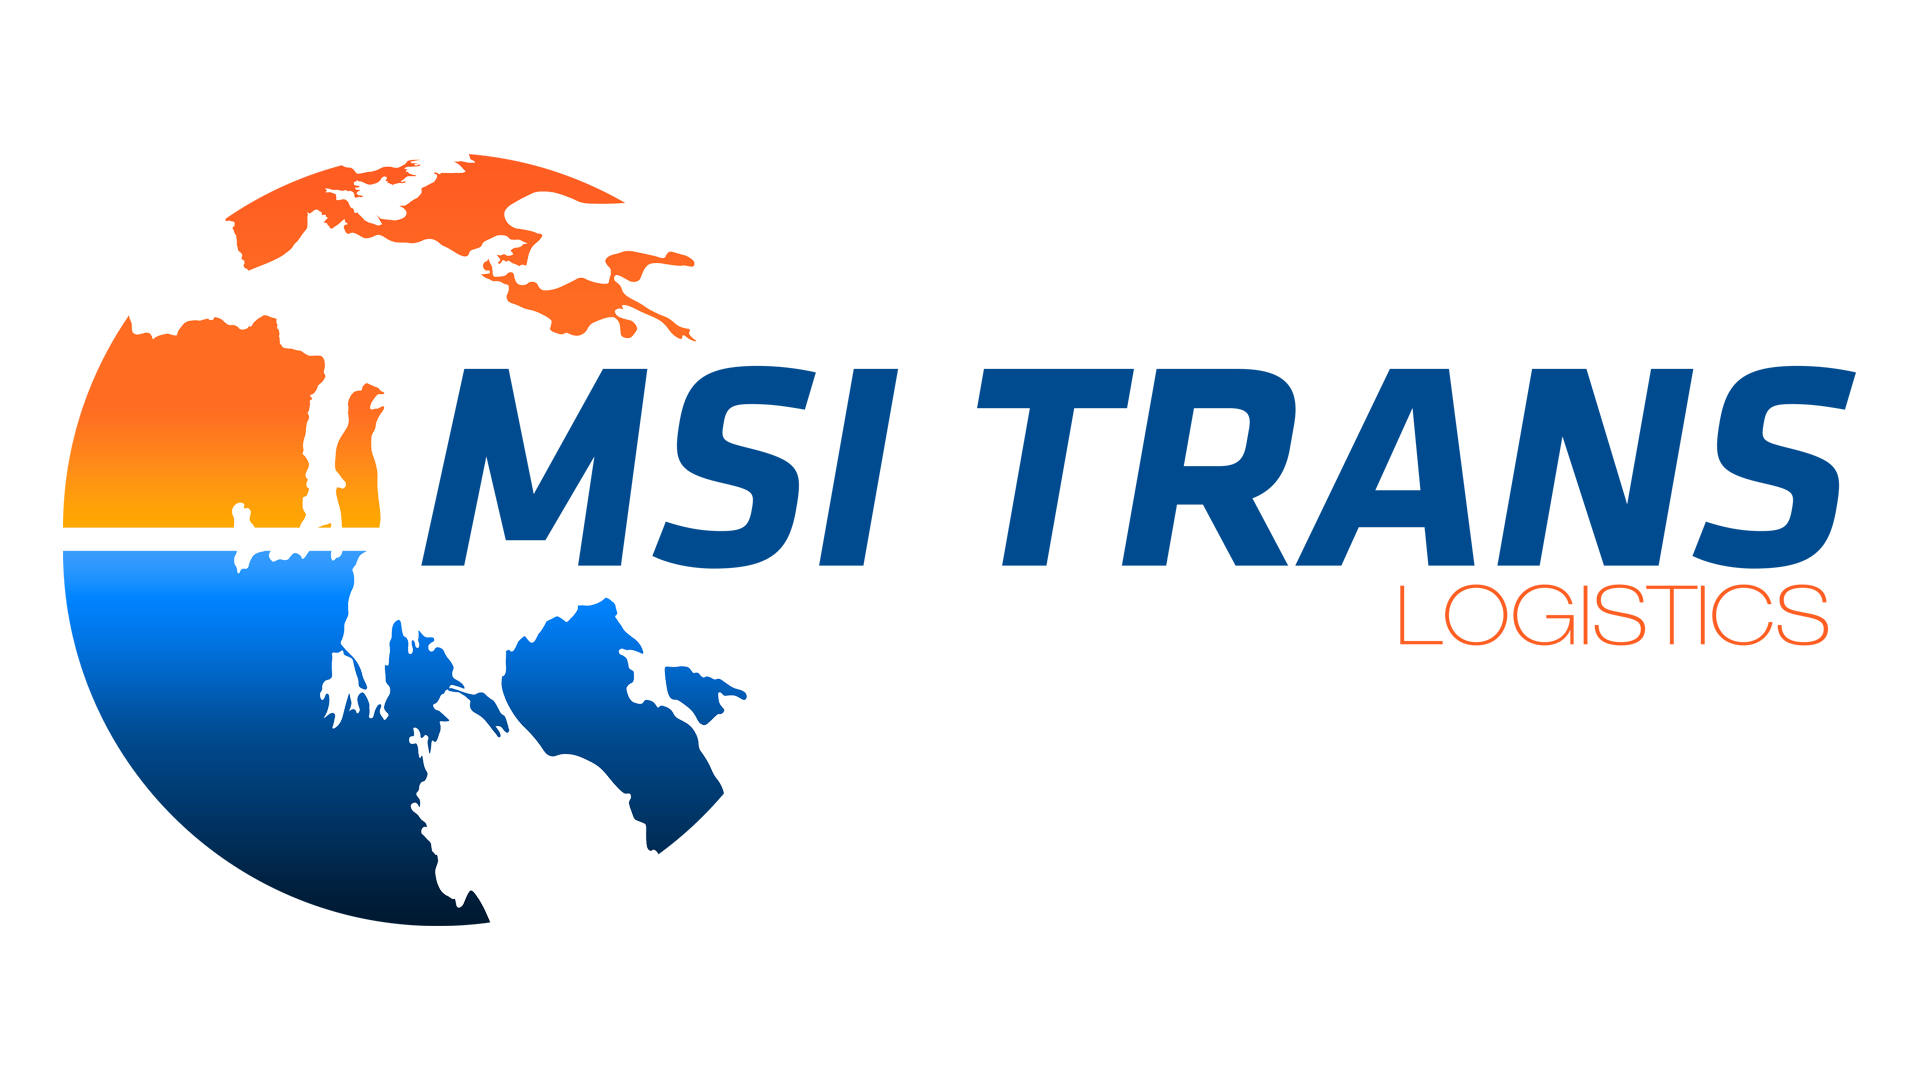 MSI Trans